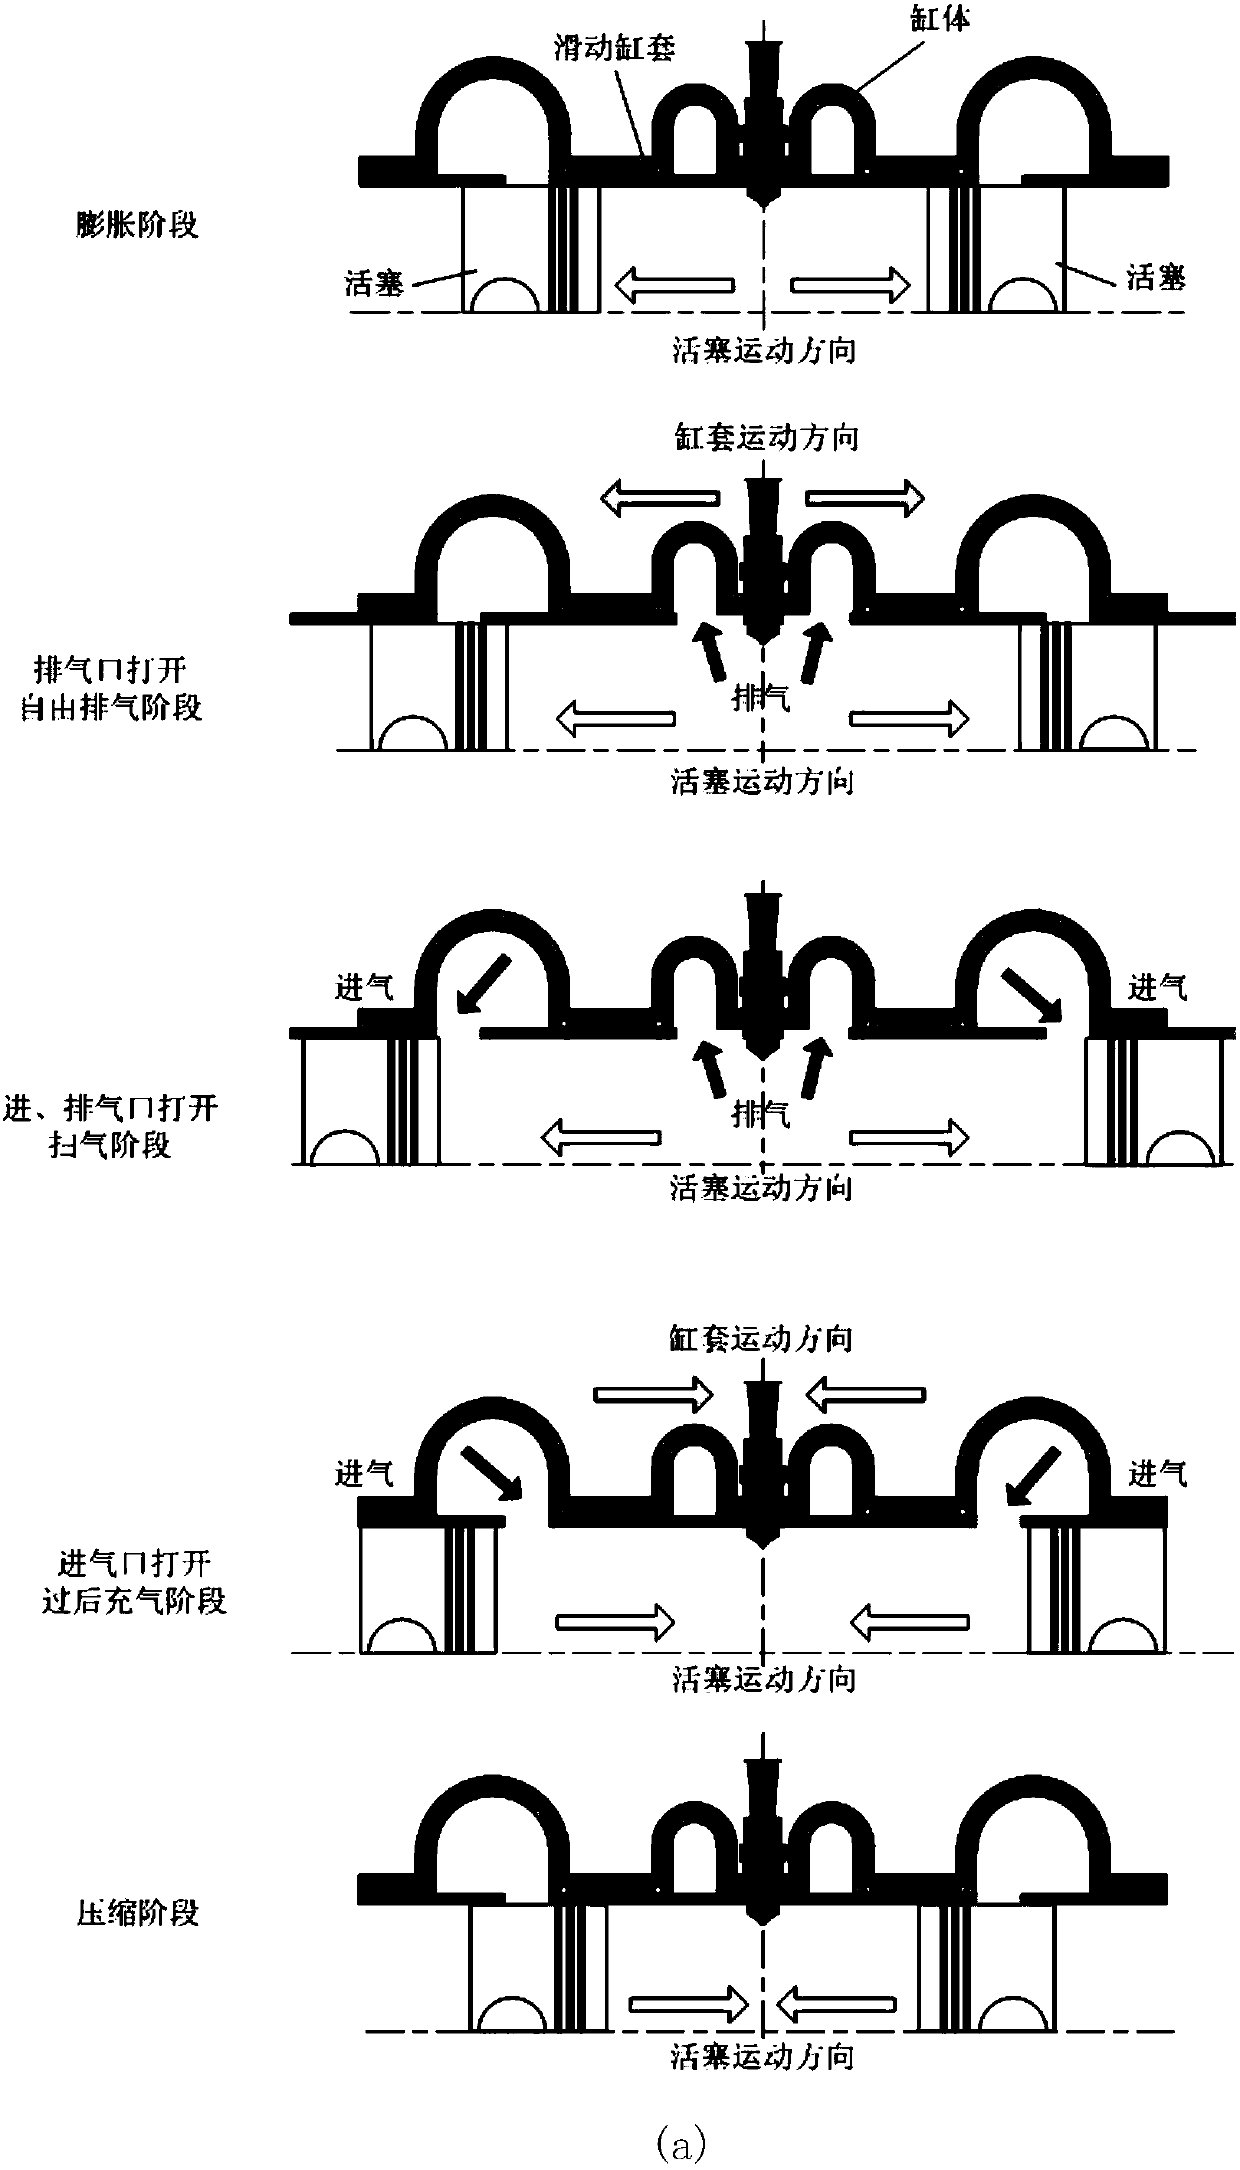 Variable valve timing phase mechanism based on sliding cylinder sleeve